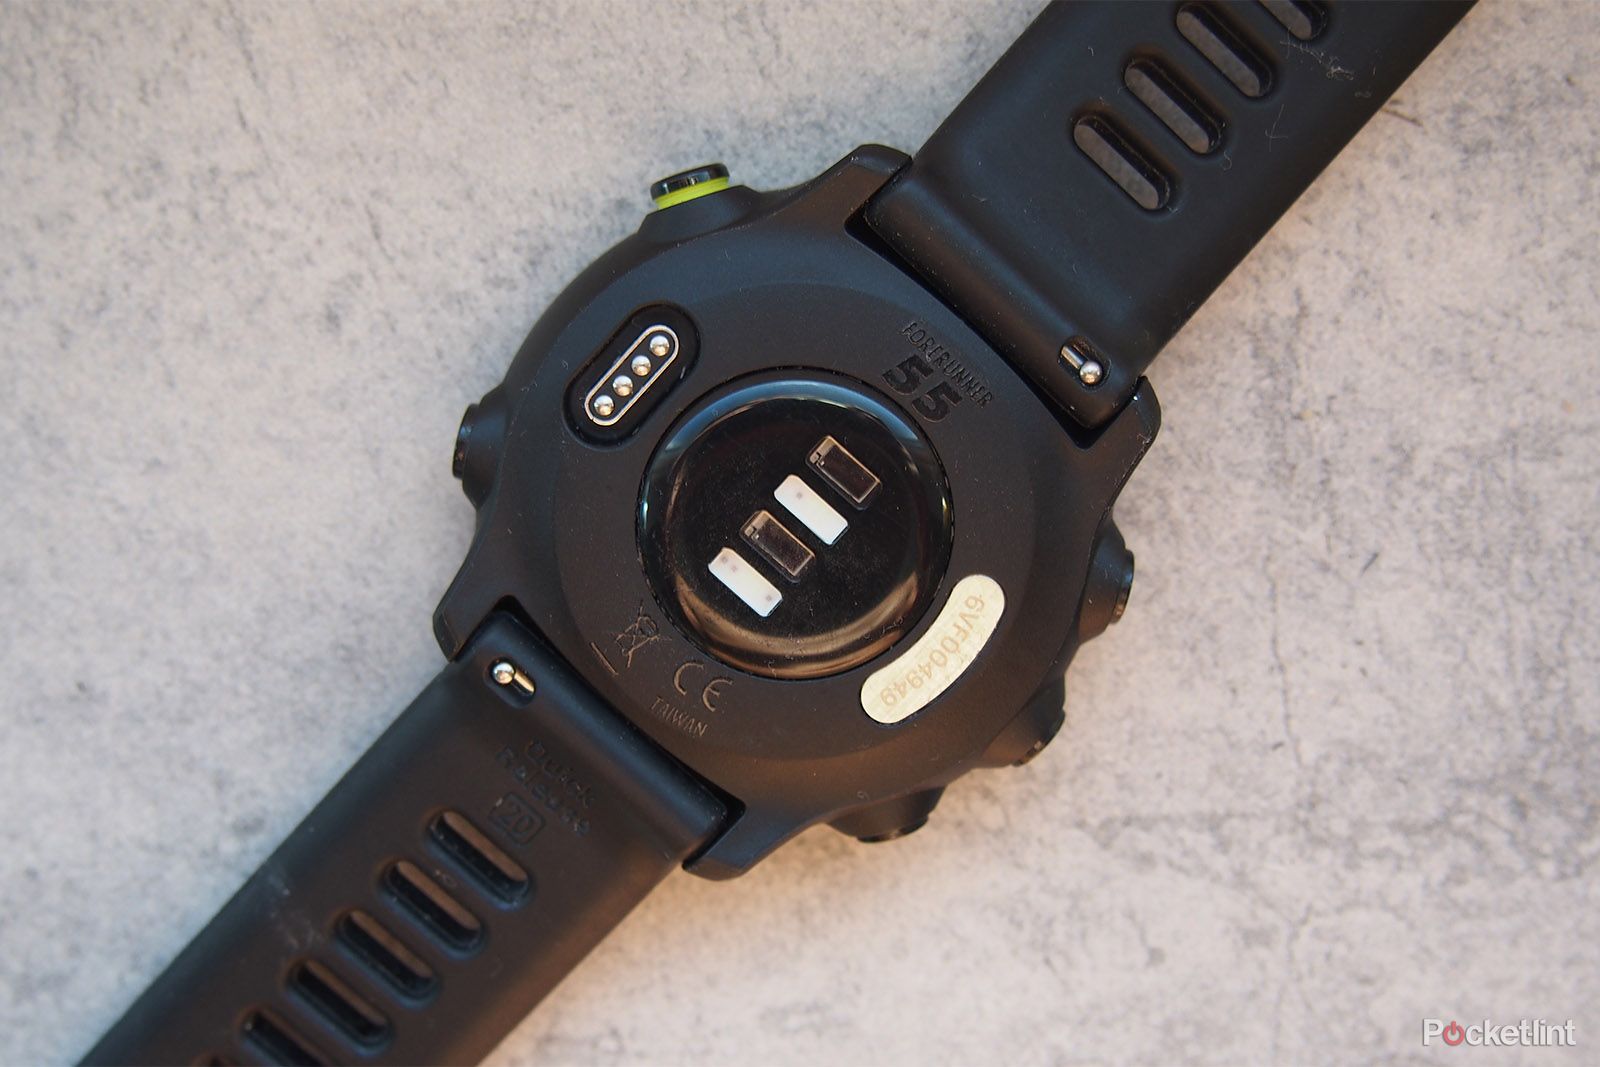 Garmin Forerunner 55 GPS Sportswatch In-Depth Review // More